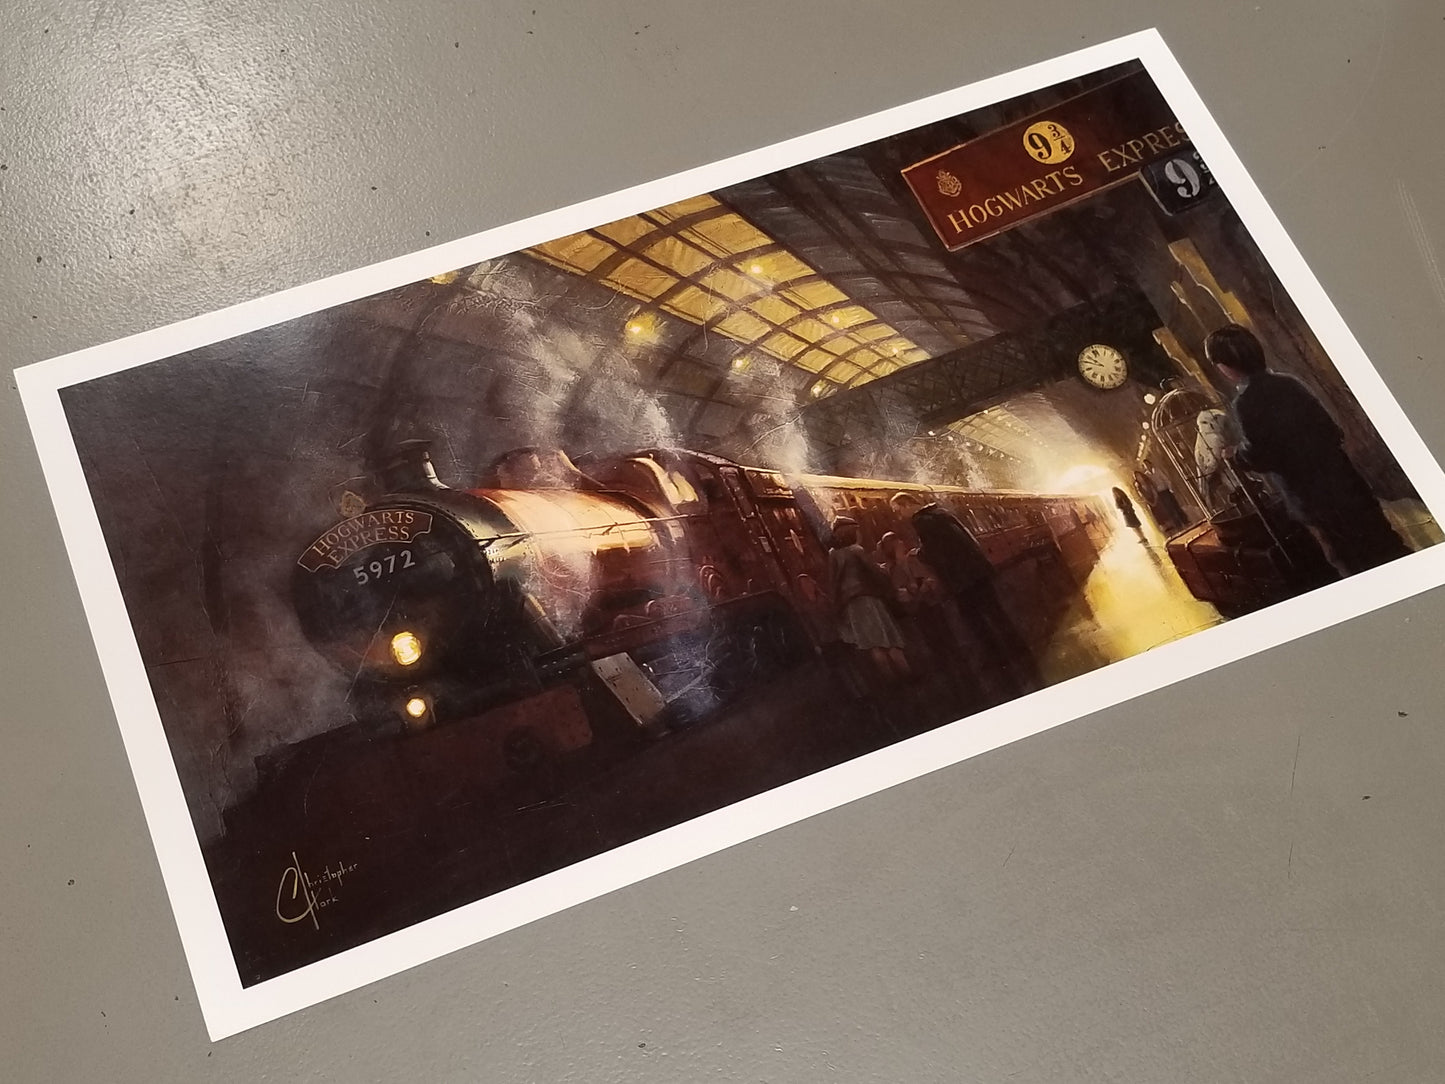 Load image into Gallery viewer, Platform 9 and 3/4 (Harry Potter) Hogwarts Express Premium Art Print
